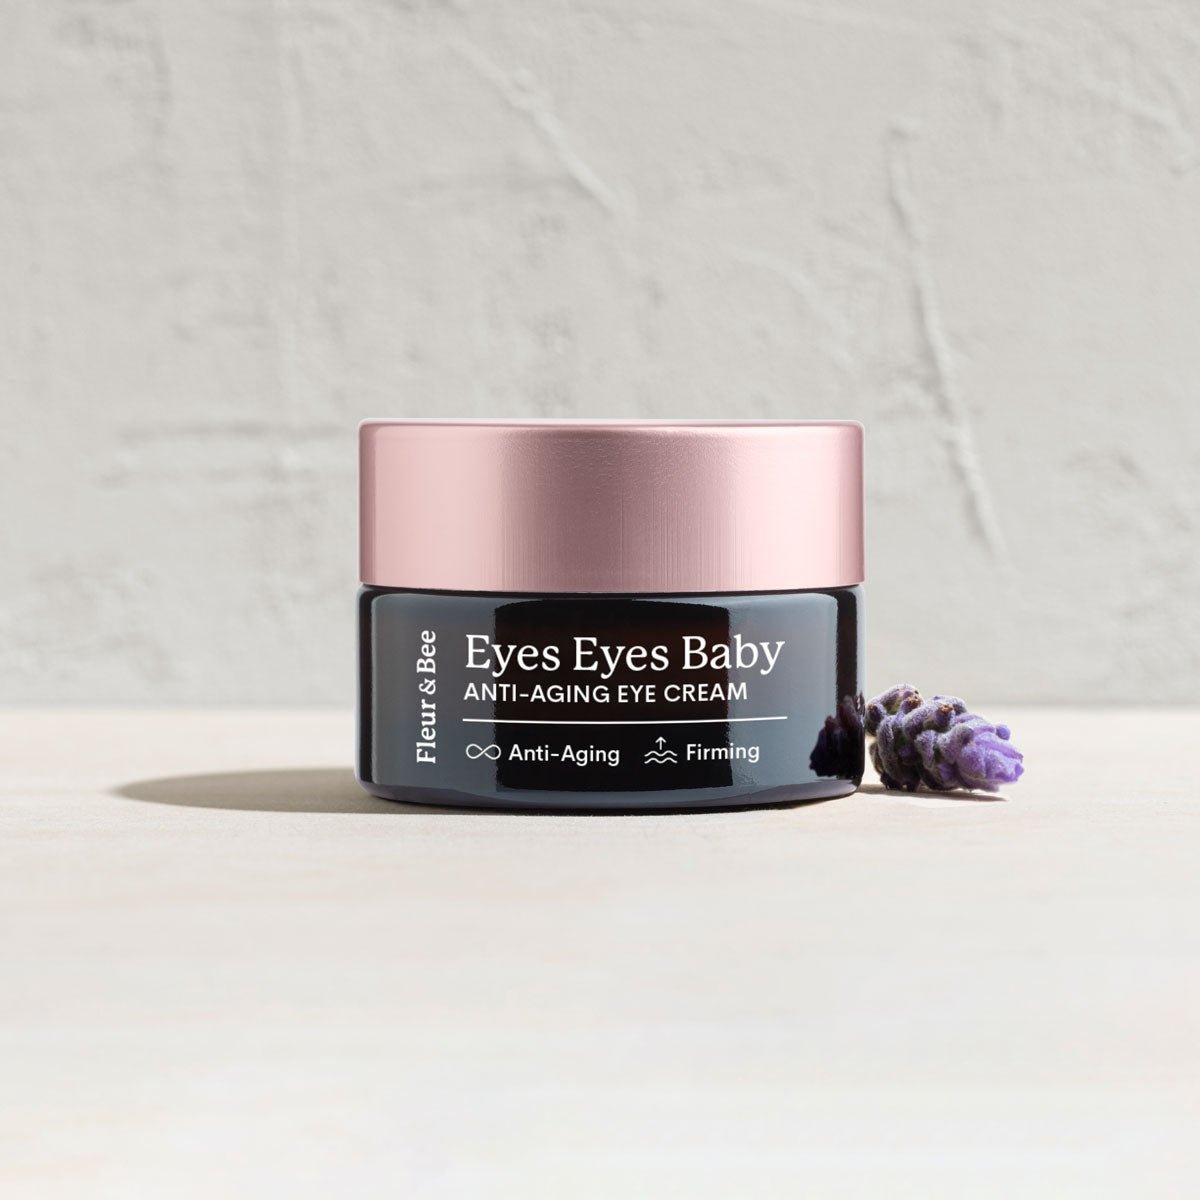 Eyes Eyes Baby, a natural anti-aging eye cream by Fleur & Bee